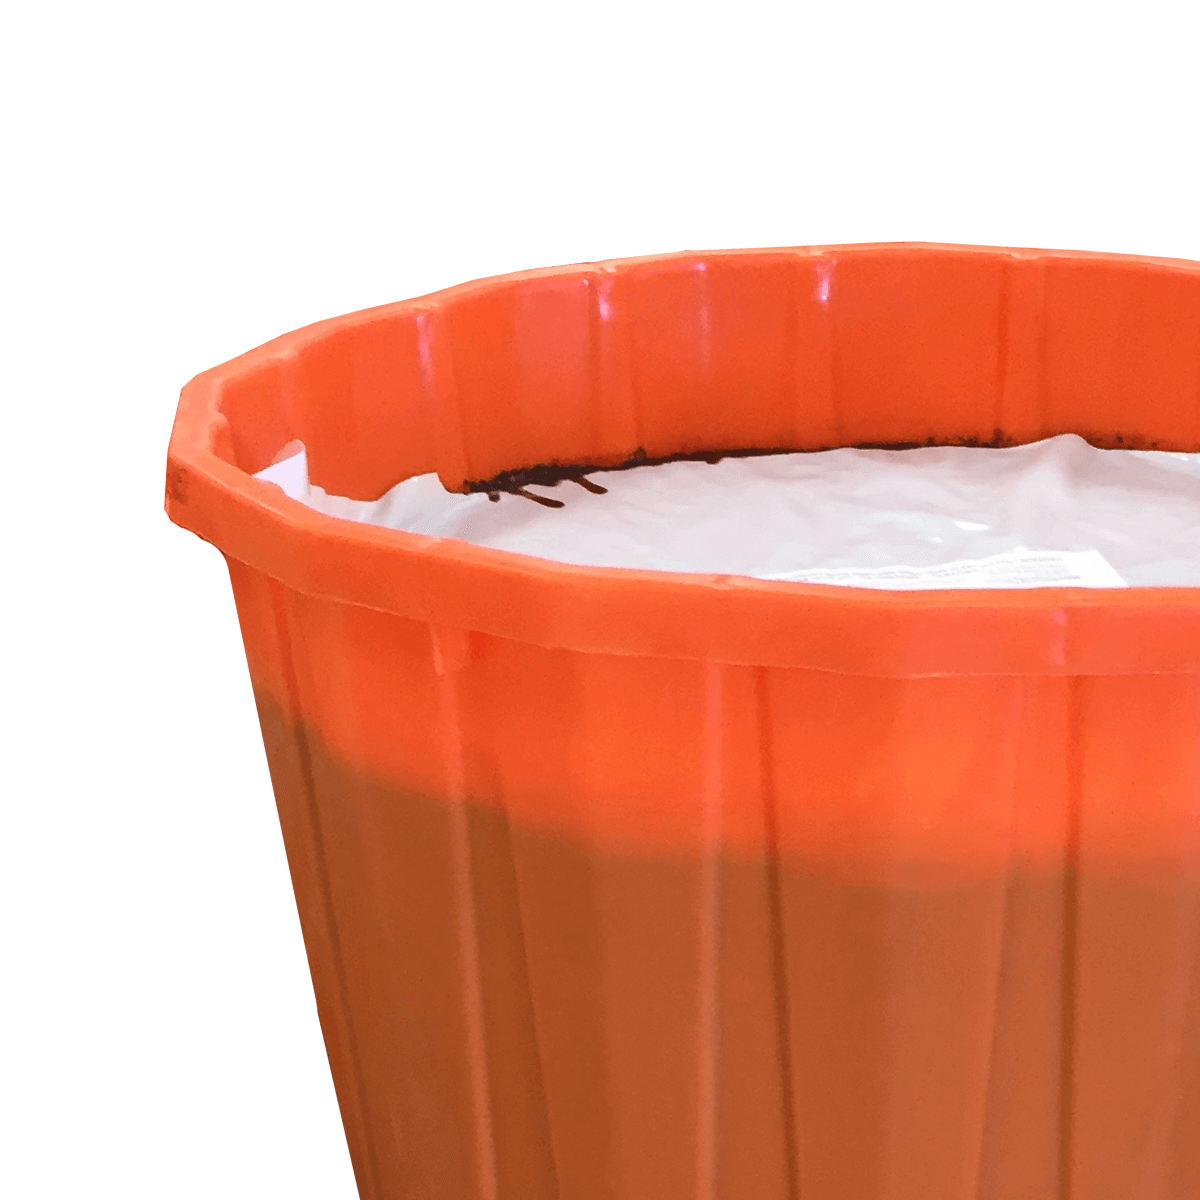 PROSTOCK™ Low Moisture Tub - Orange - 16:0 - 56 kg